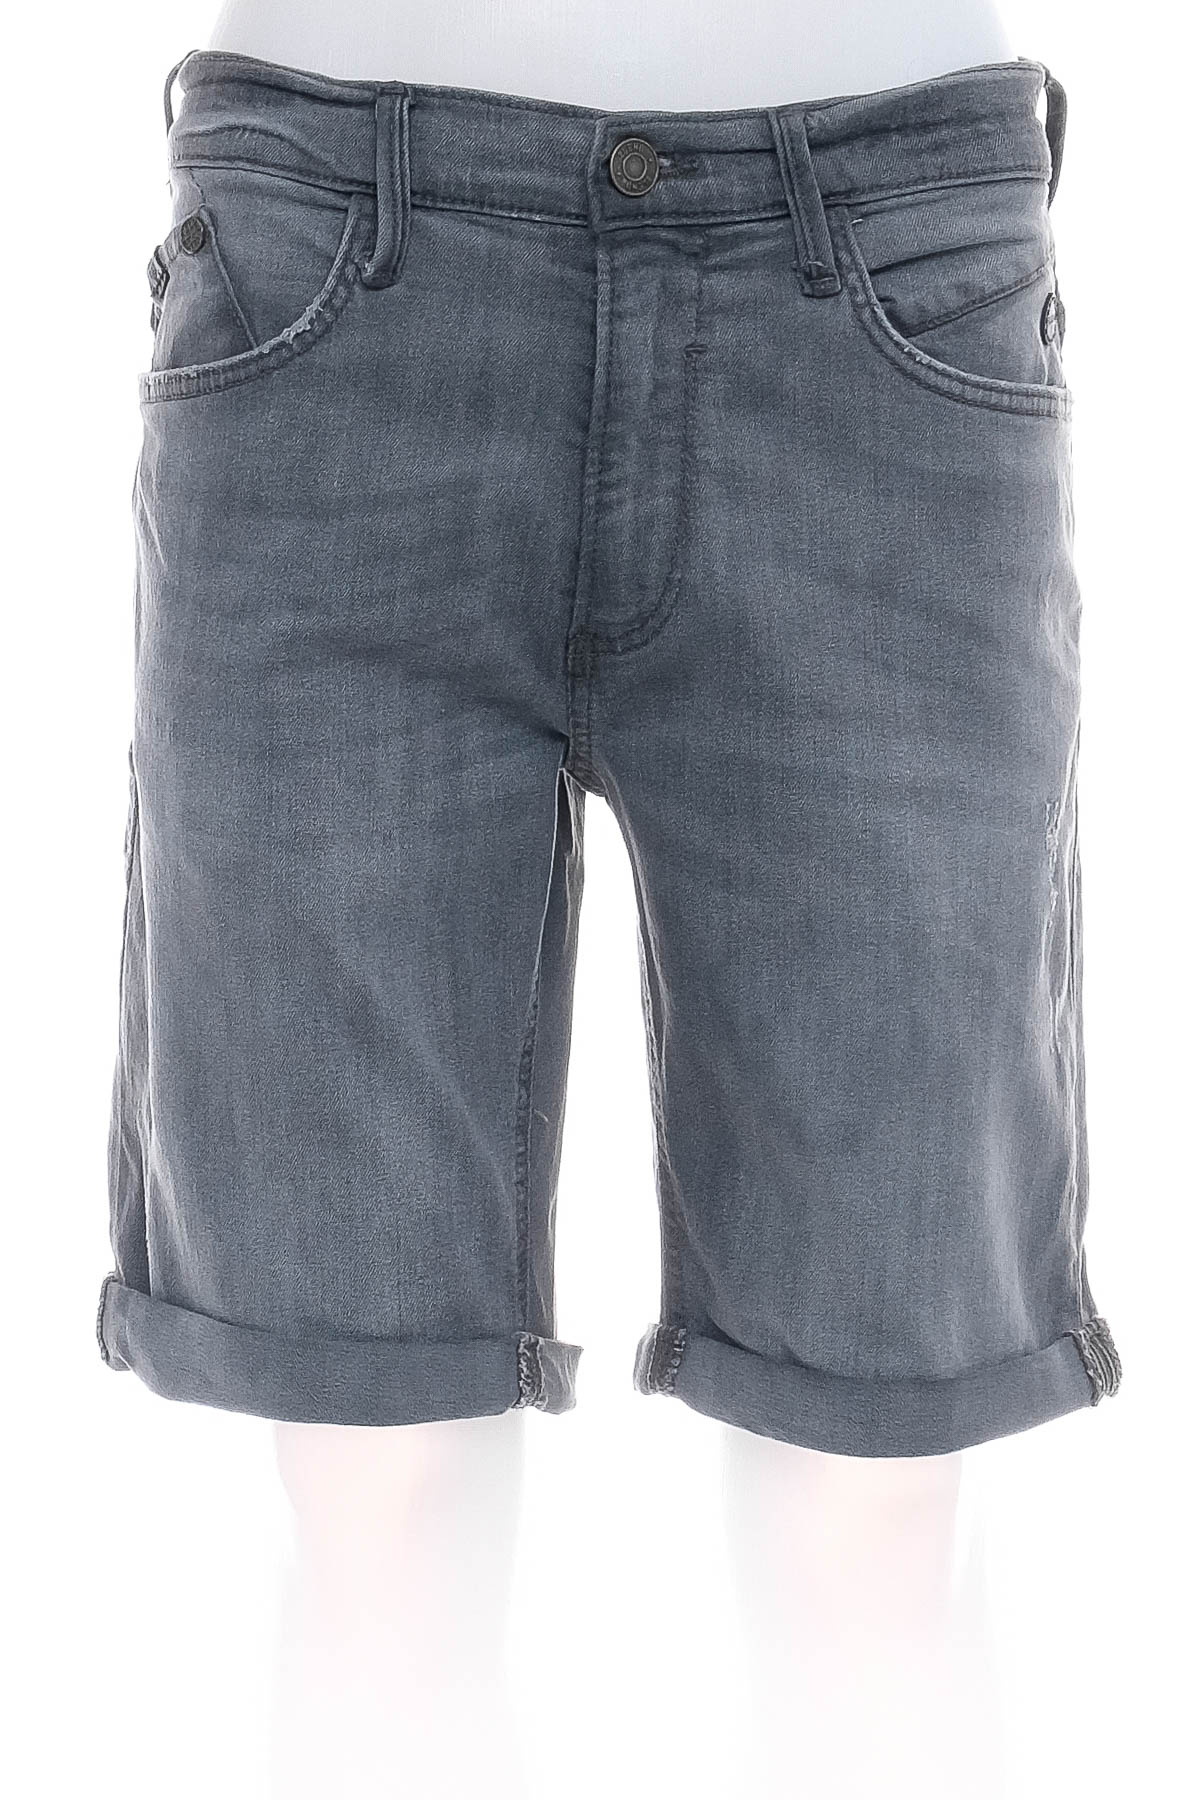 Men's shorts - Blend - 0